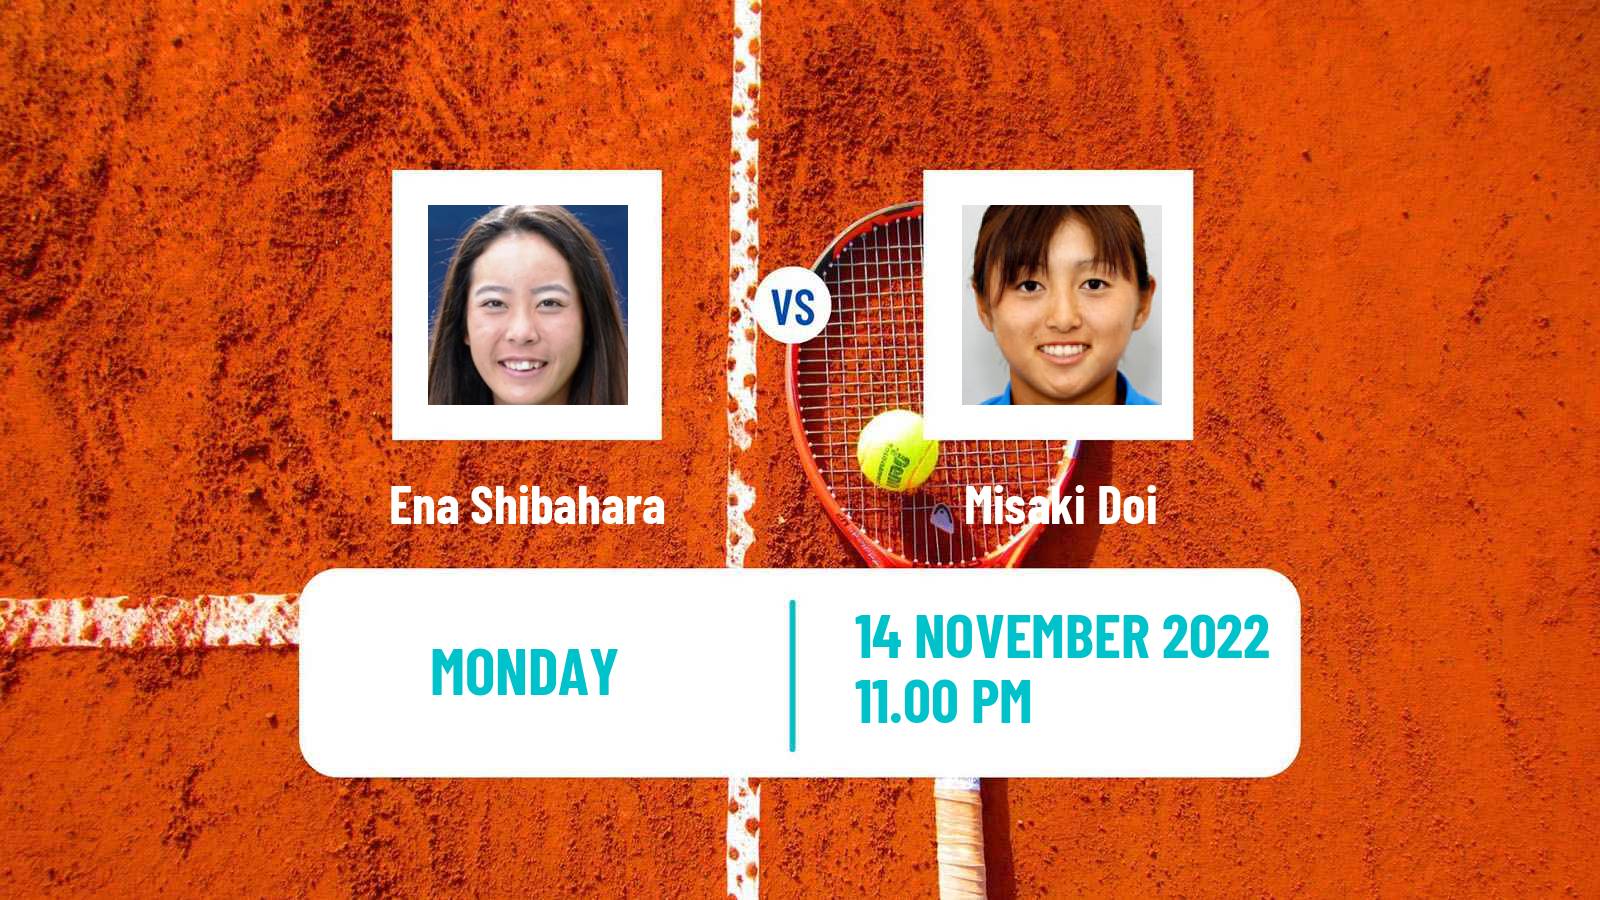 Tennis ITF Tournaments Ena Shibahara - Misaki Doi